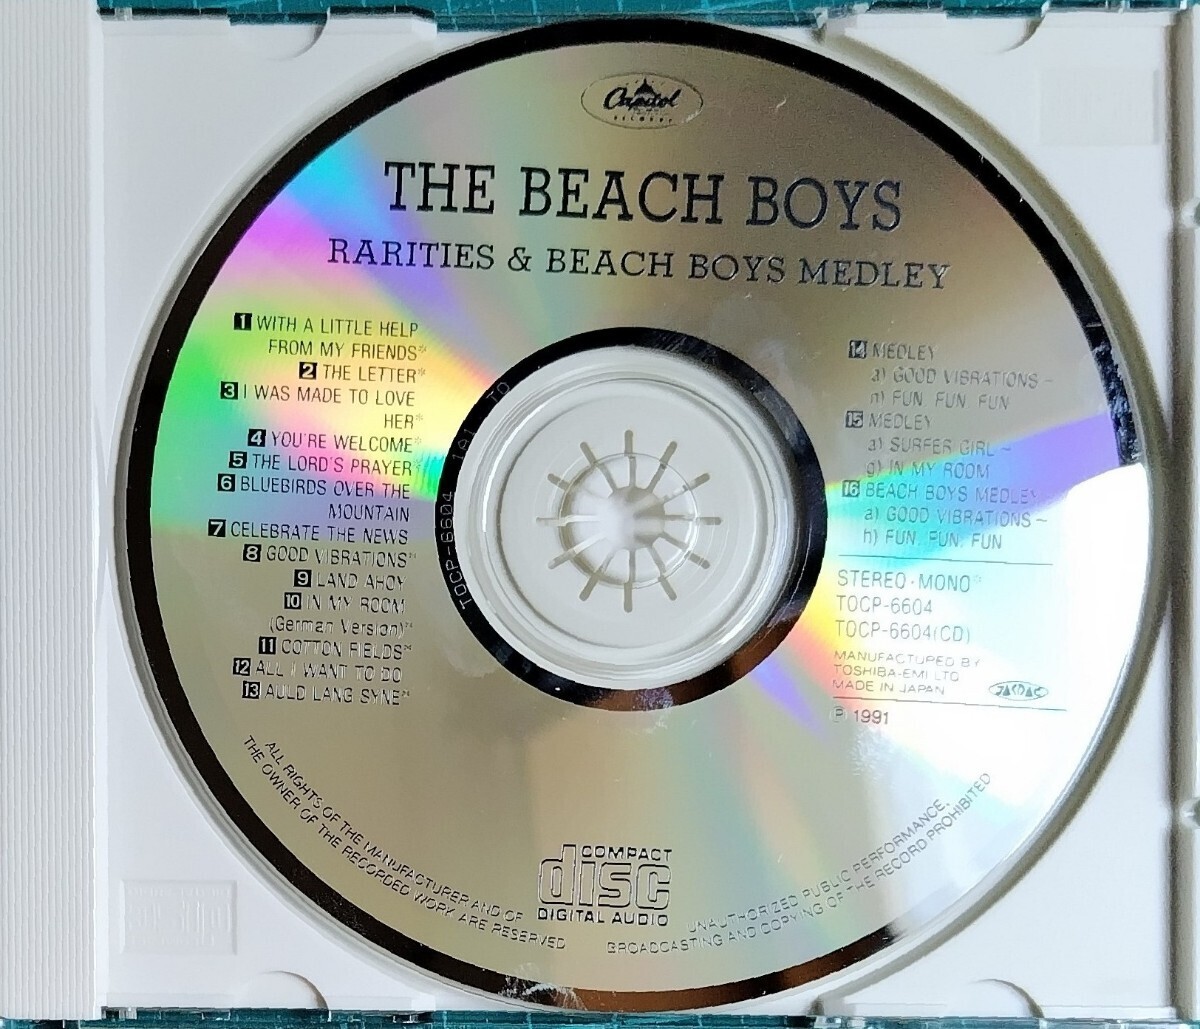 THE BEACH BOYS RARITIES ビーチ・ボーイズ レアリティーズ＆ビーチ・ボーイズ・メドレー の画像2